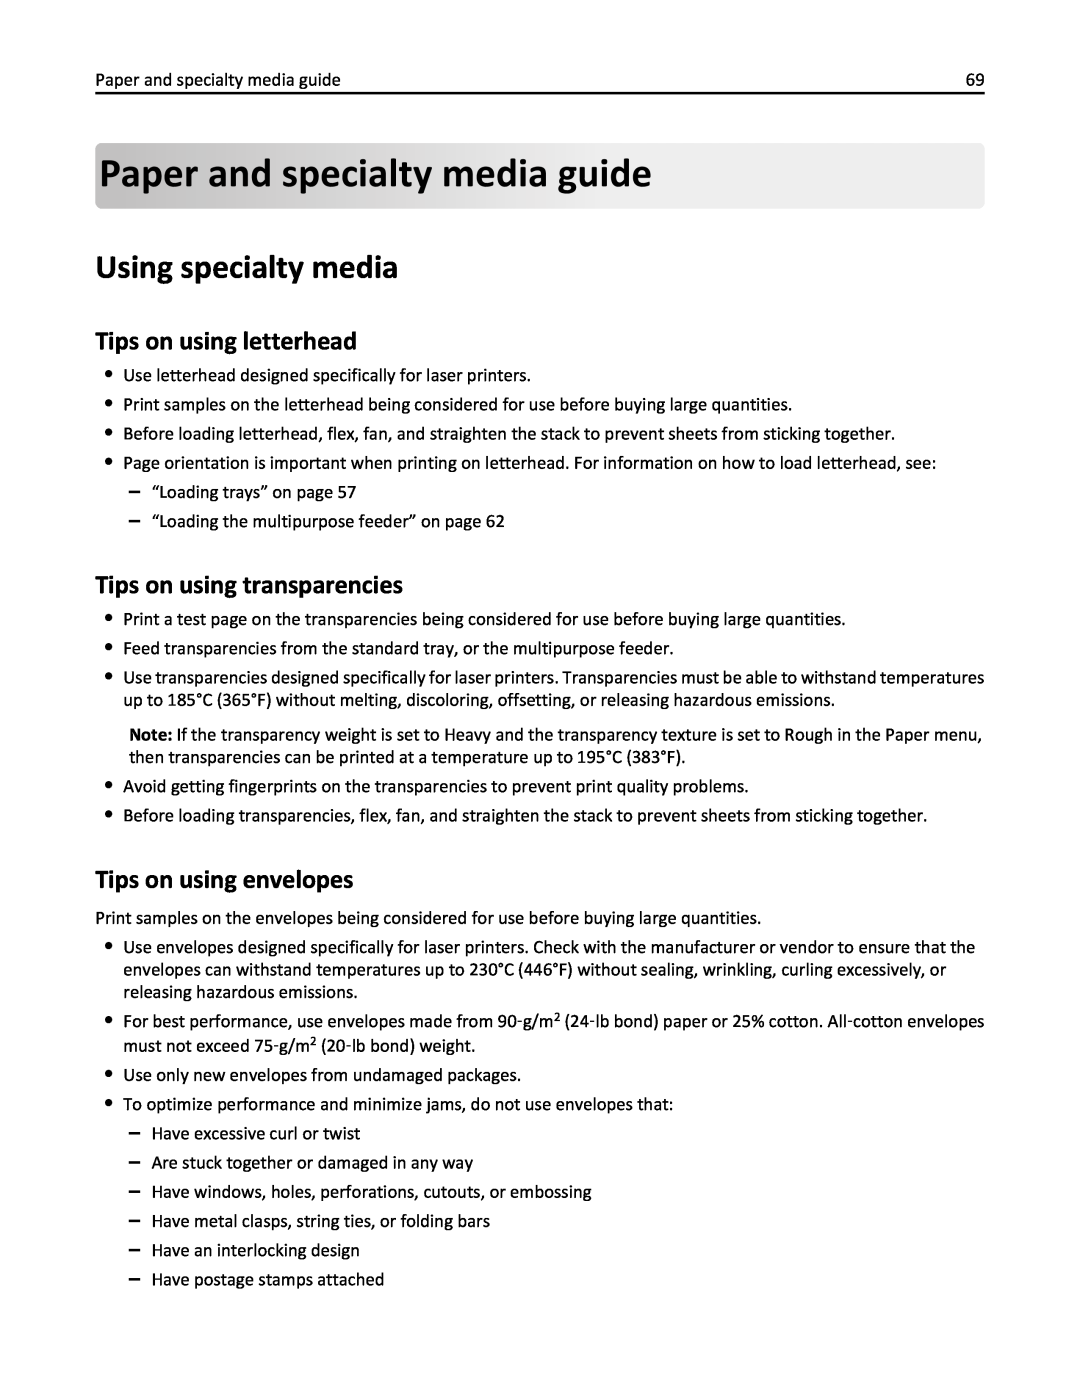 Lexmark MX410DE Paper andspecialtymedia guide, Using specialty media, Tips on using letterhead, Tips on using envelopes 